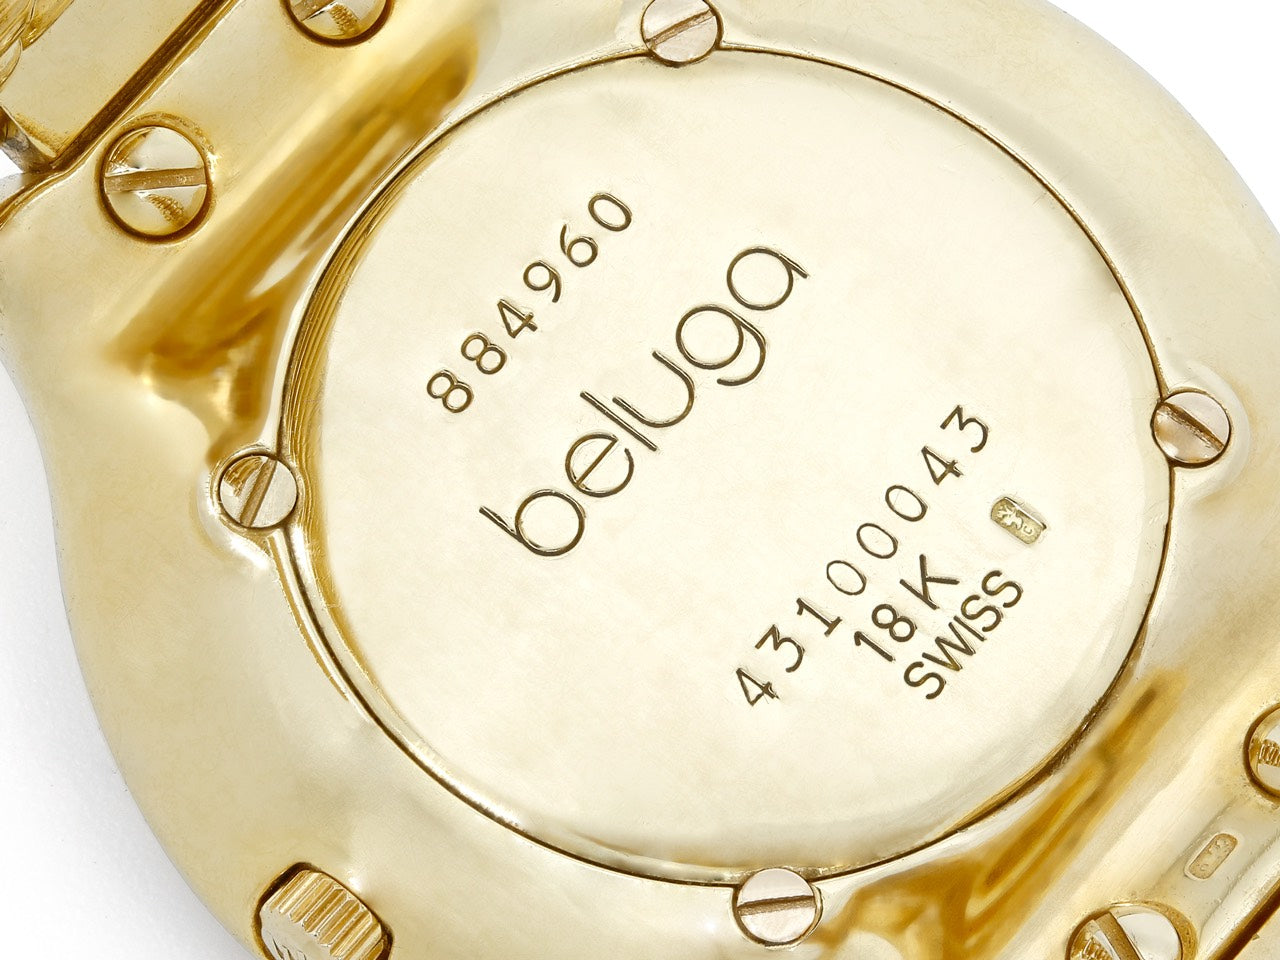 Ebel 'Beluga' Diamond Watch in 18K Gold, 31 mm